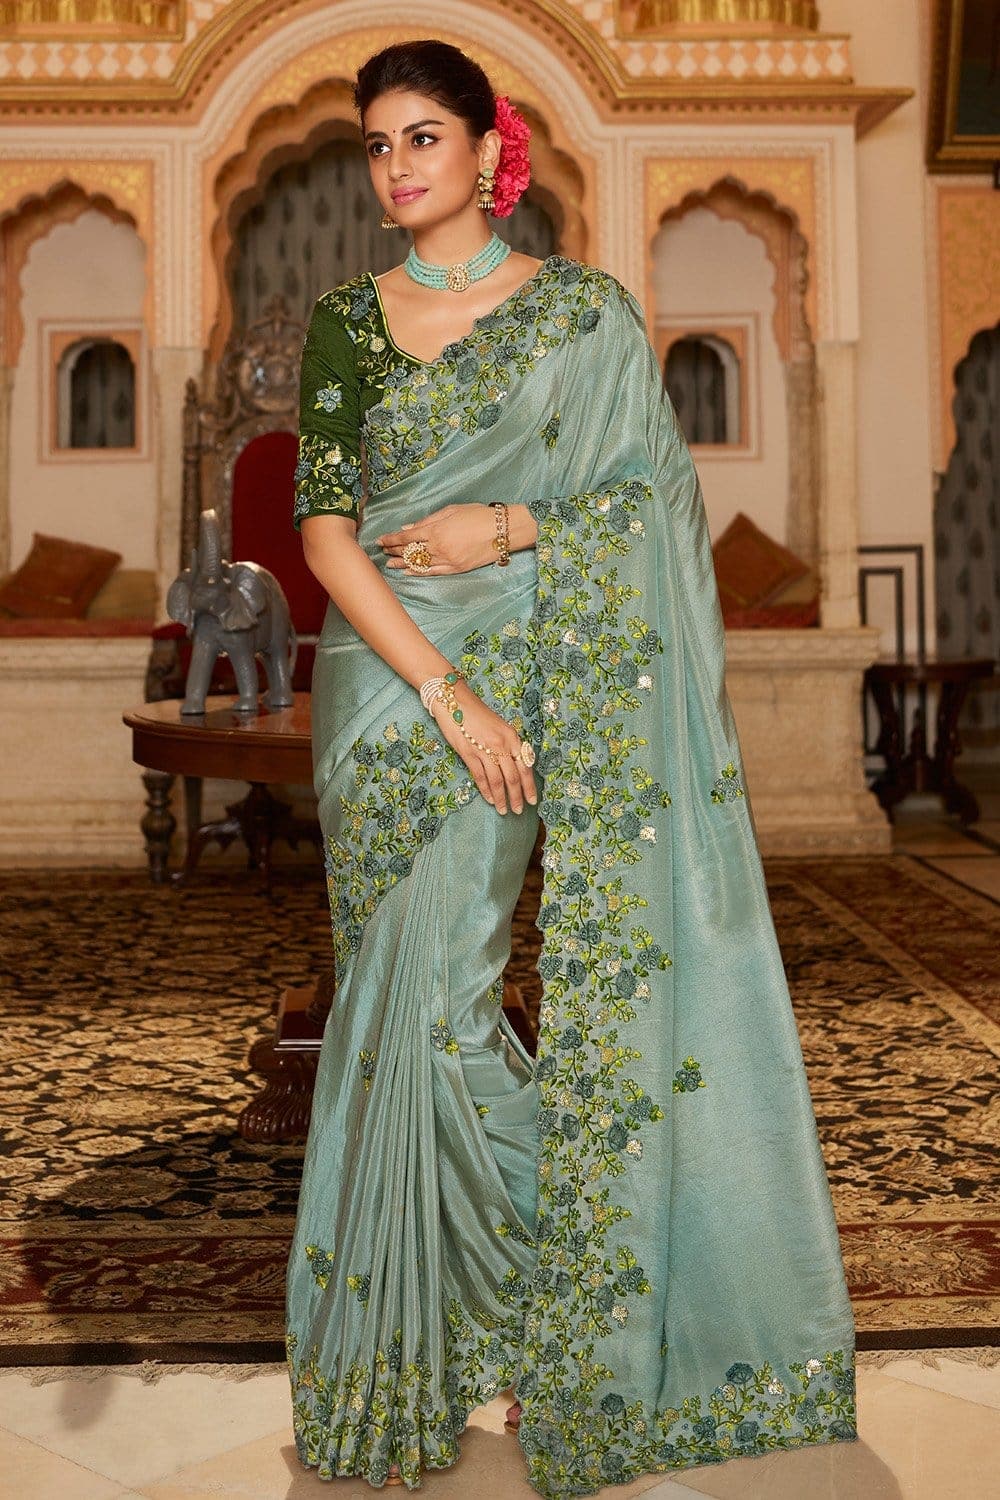 Beautiful Floral Printed Designer Saree dvz0002899 - Party wear saree online  - Dvanza.com